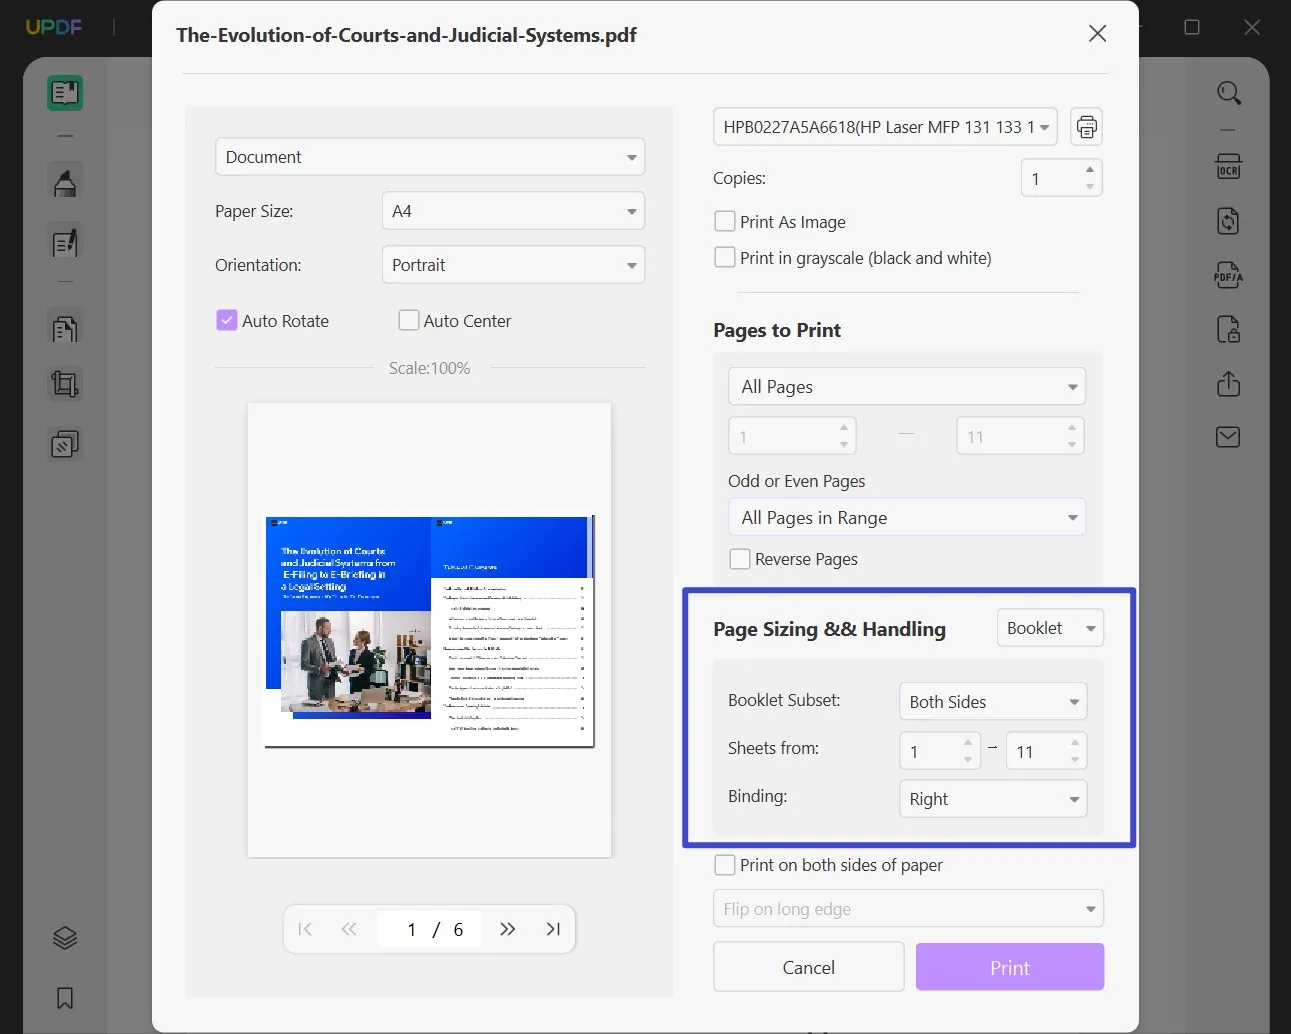 Open print settings to print pdf as booklet